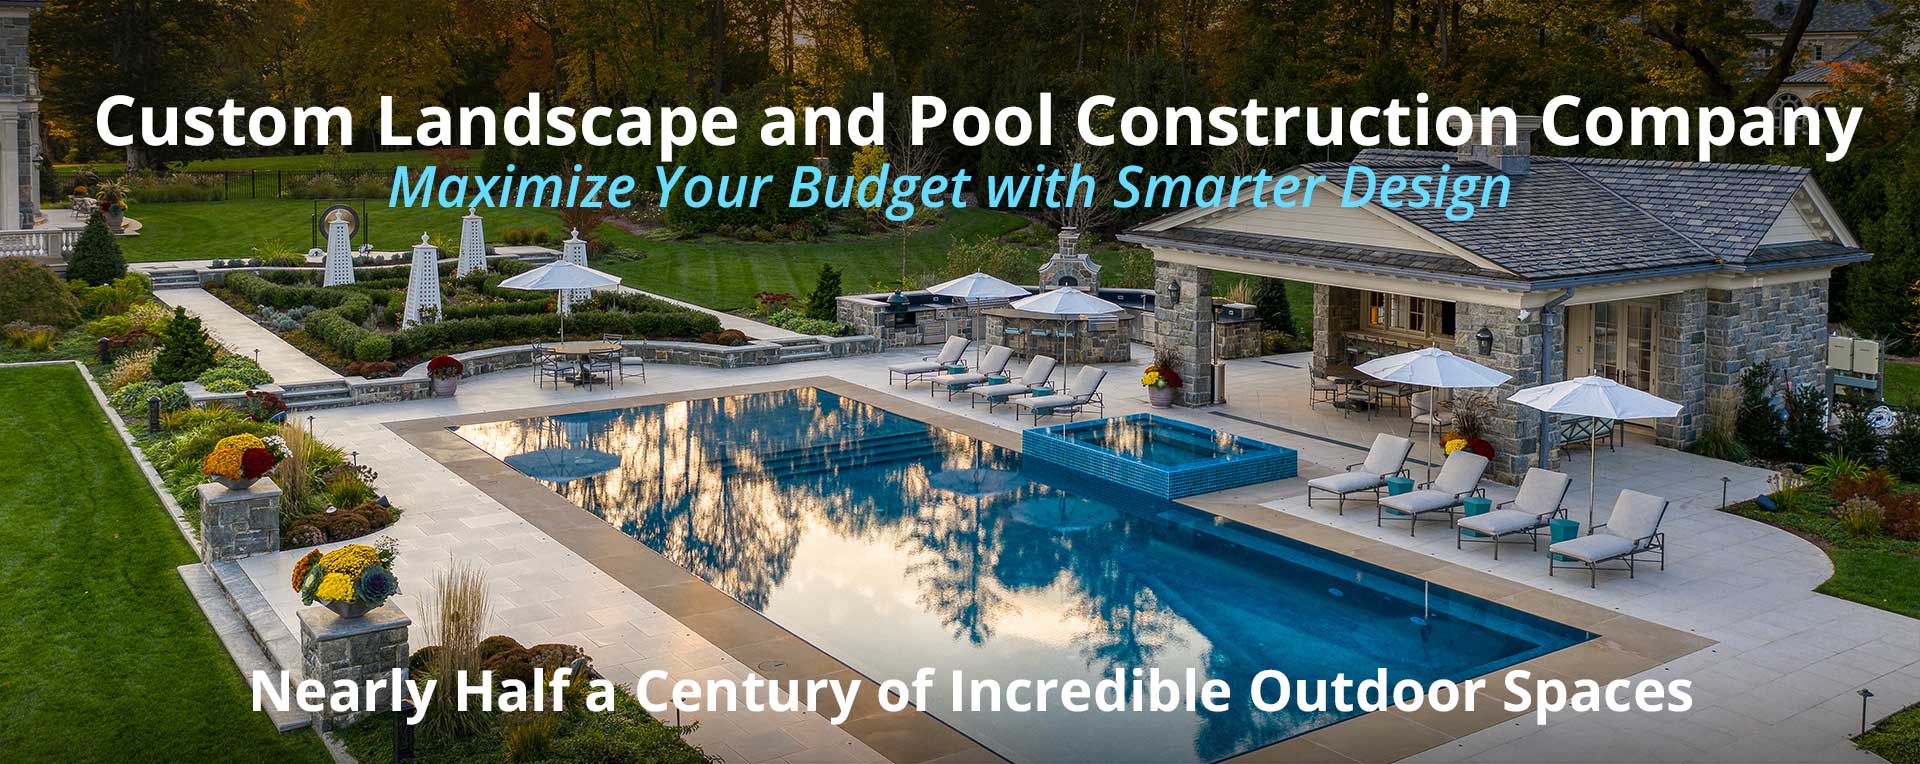 Custom Landscape and Pool Construction Company